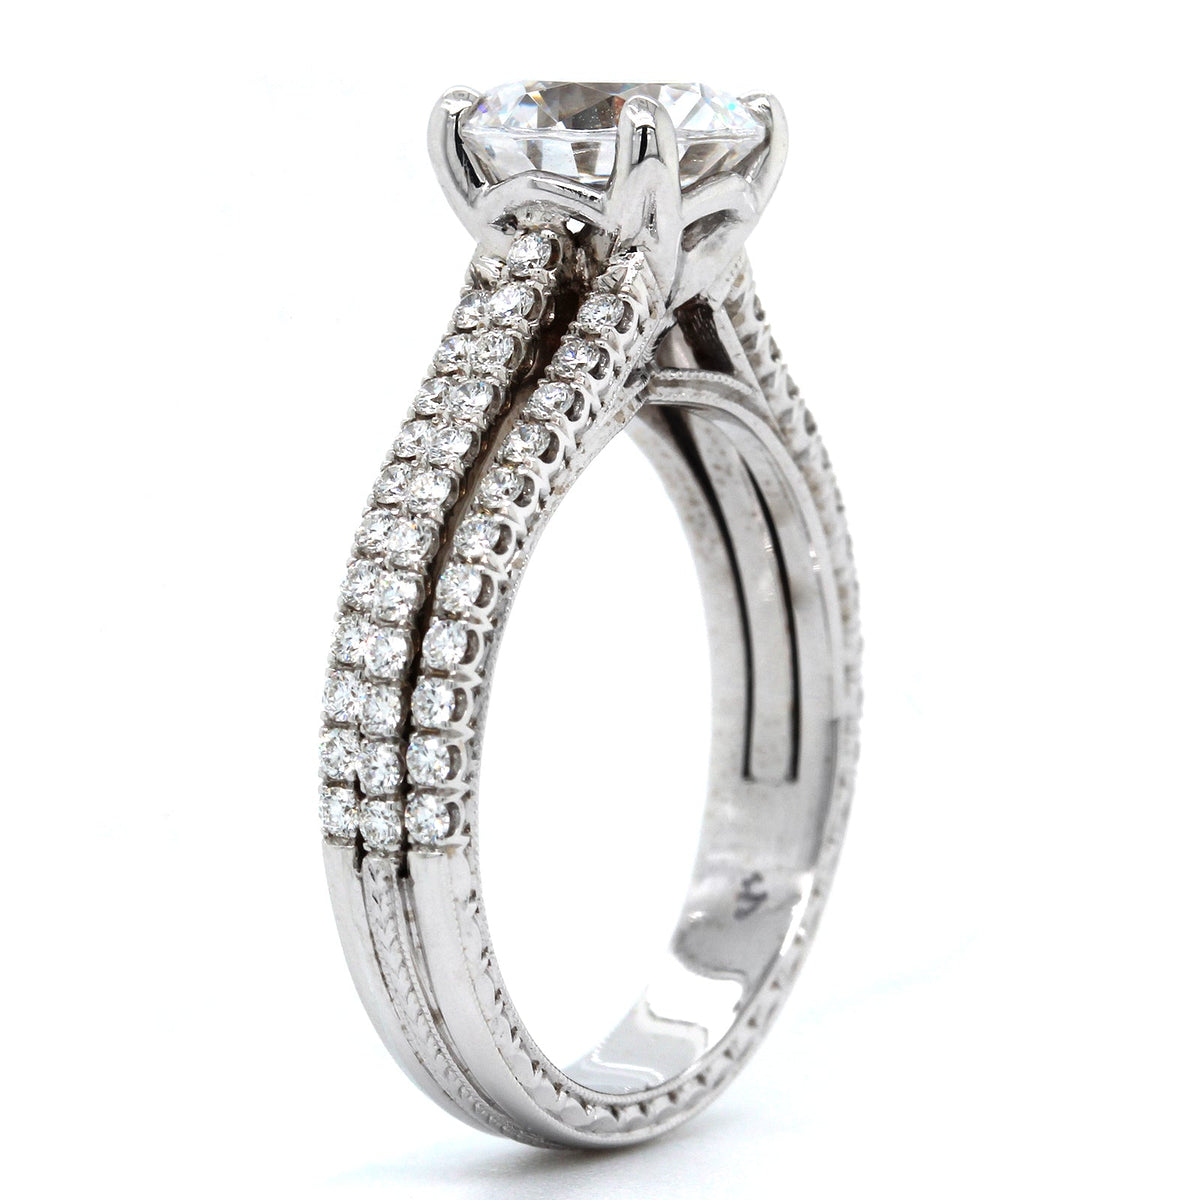 18K White Gold Prong Set 3 Row Diamond Engagement Ring Setting, 18k white gold, Long's Jewelers